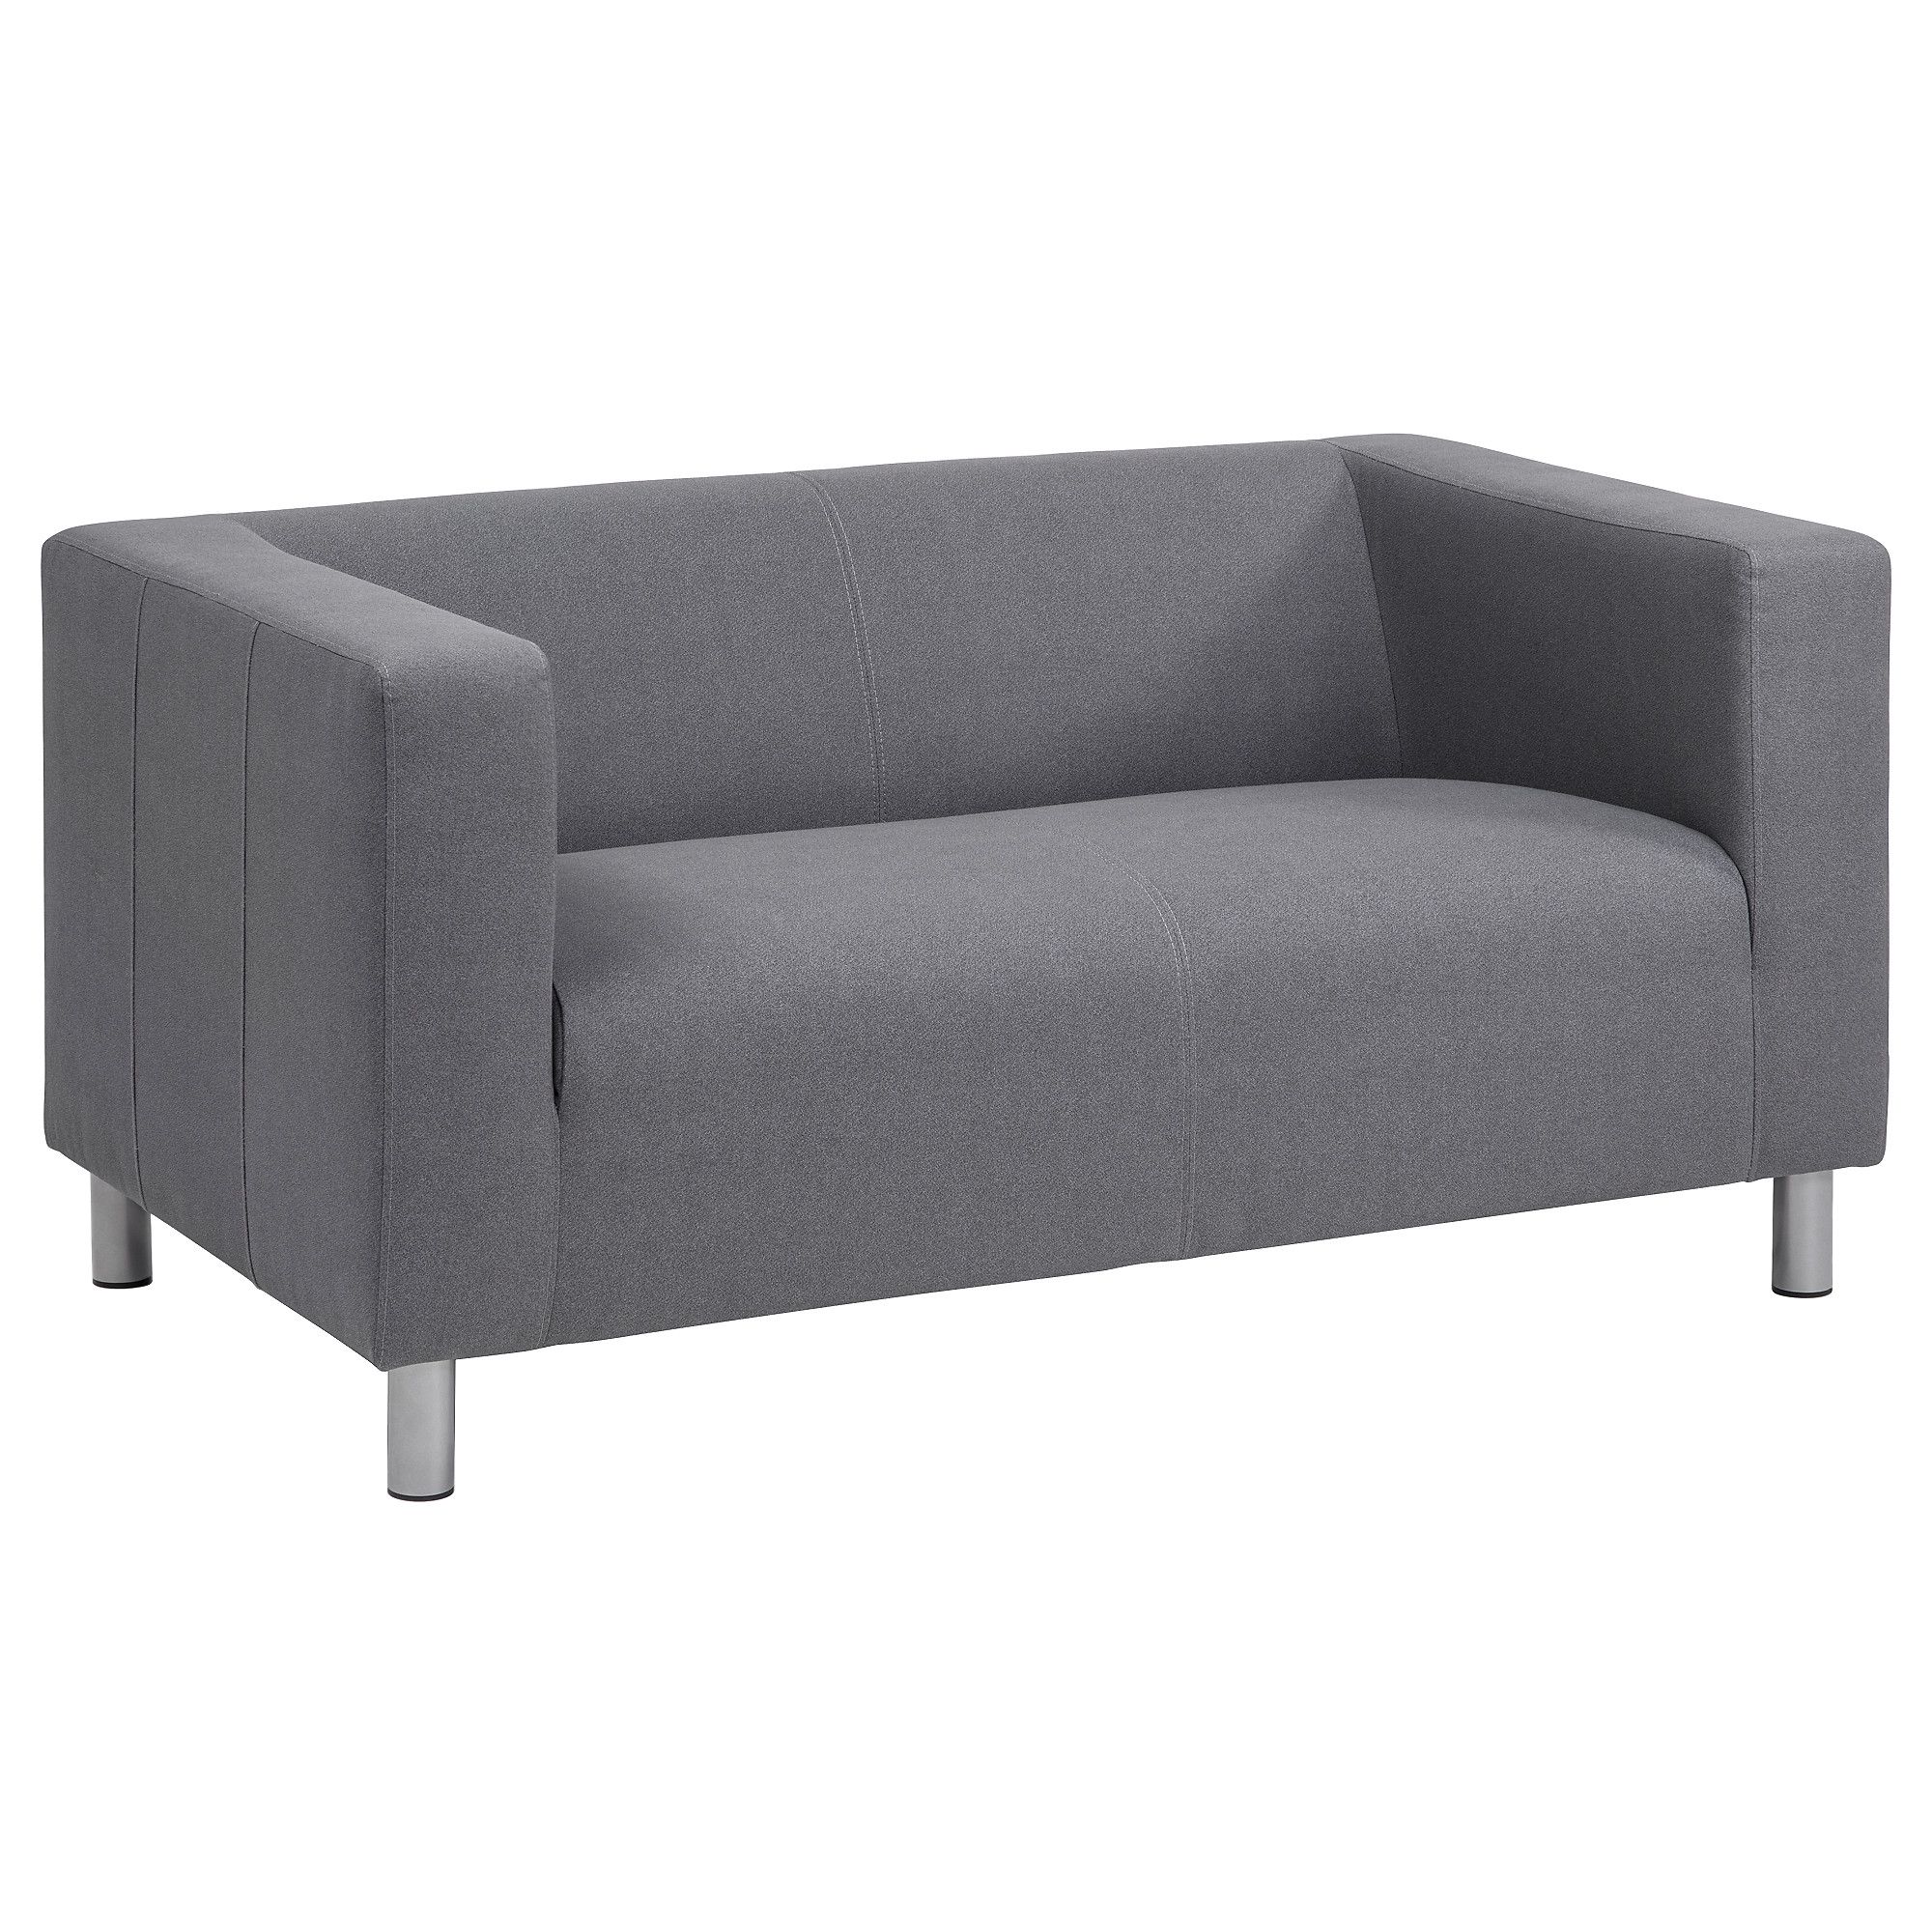 Two Seater Sofas Within Well Known Klippan Compact 2 Seat Sofa Flackarp Grey – Ikea (Photo 1 of 15)